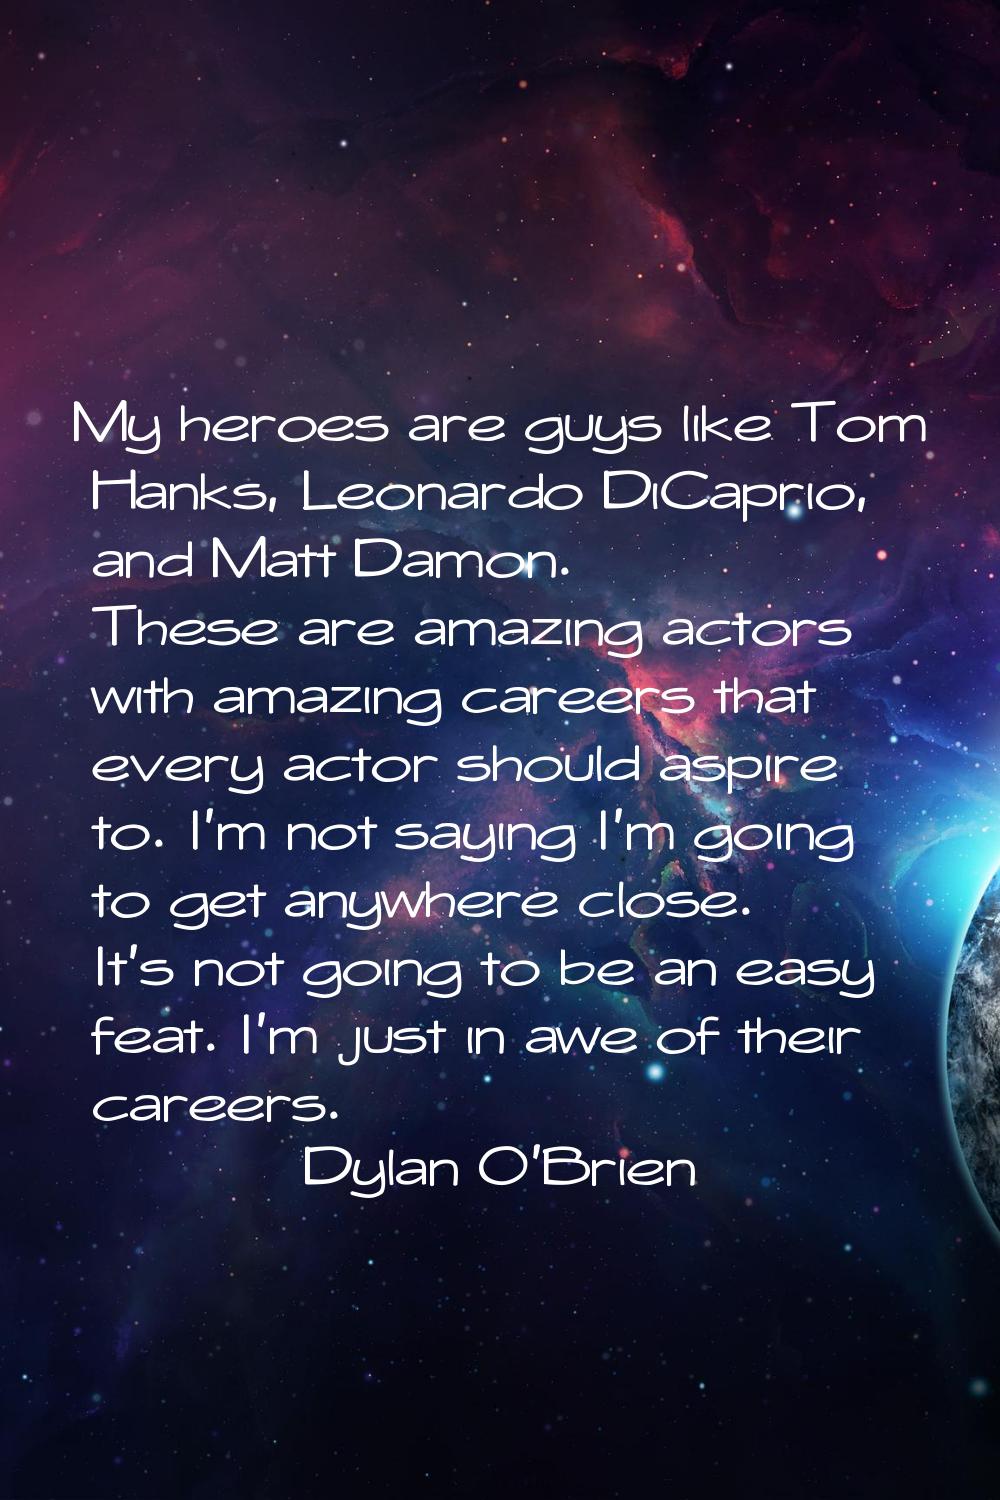 My heroes are guys like Tom Hanks, Leonardo DiCaprio, and Matt Damon. These are amazing actors with